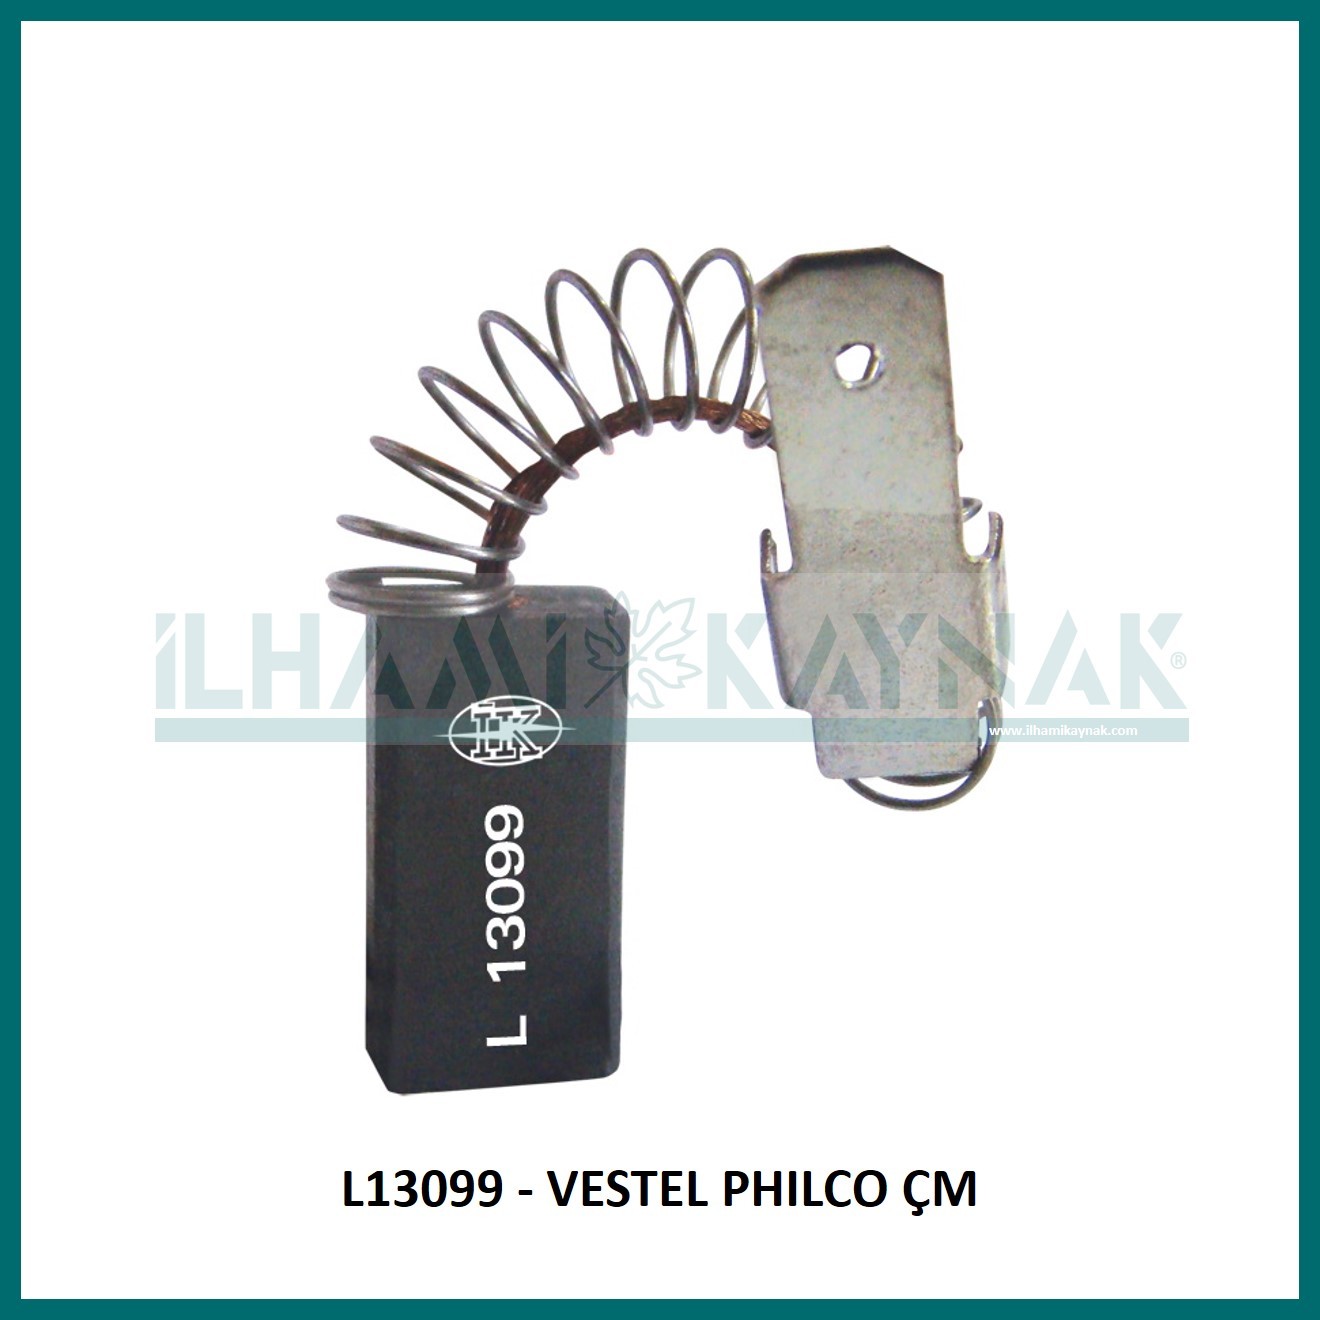 L13099 - VESTEL PHILCO ÇM - 6,5*10*20 mm - 100 Adet